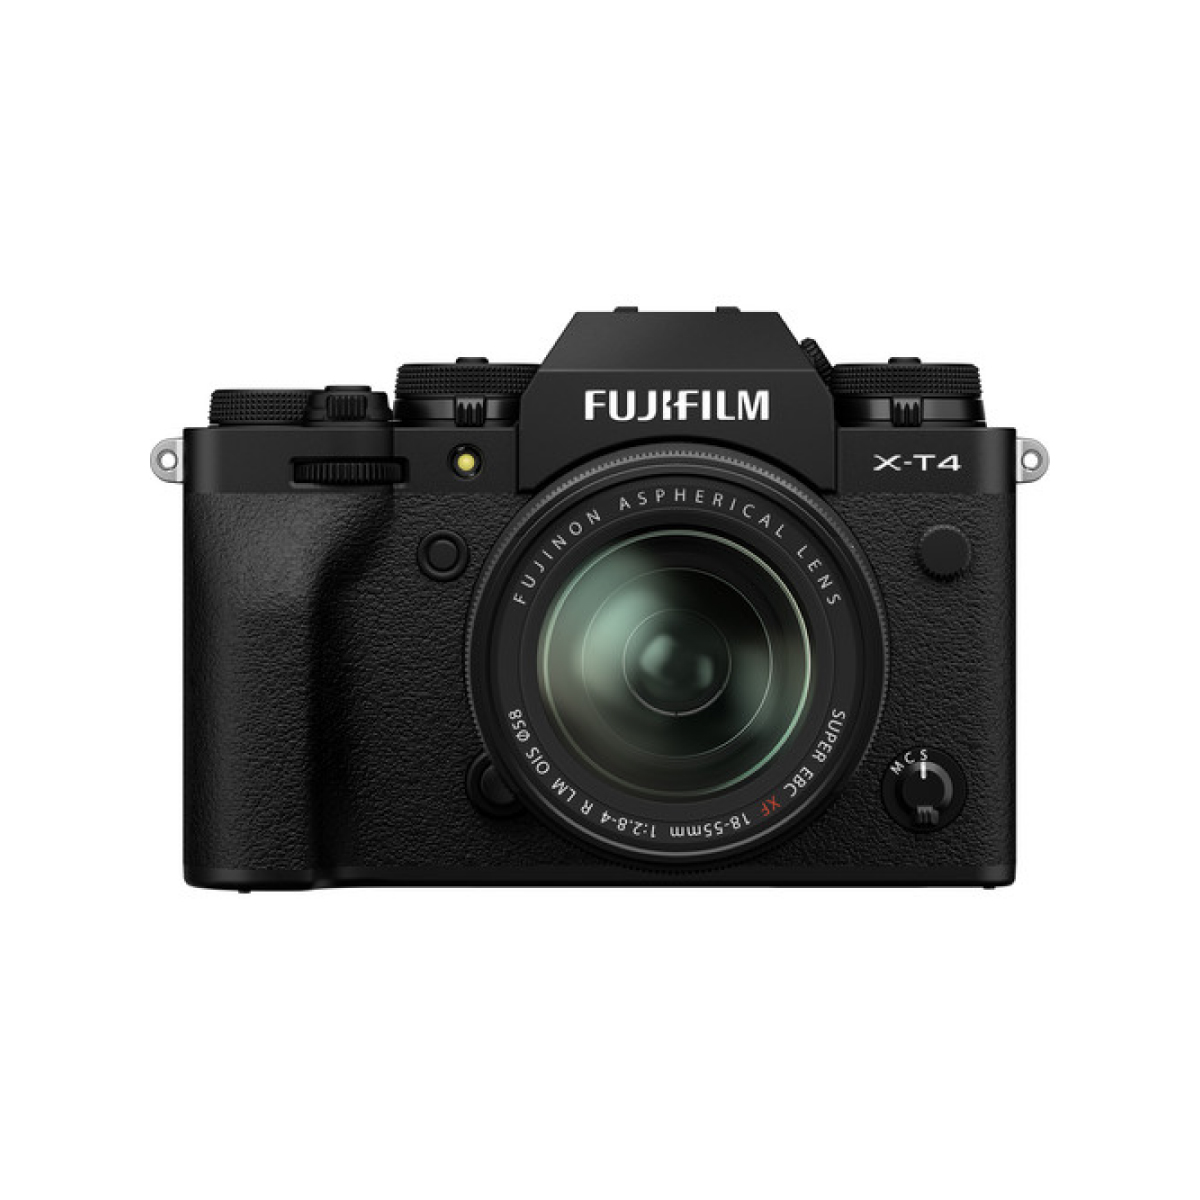 Fujifilm X-T4 26MP Mirrorless Camera Body with XF18-55mm Lens – Black (1)